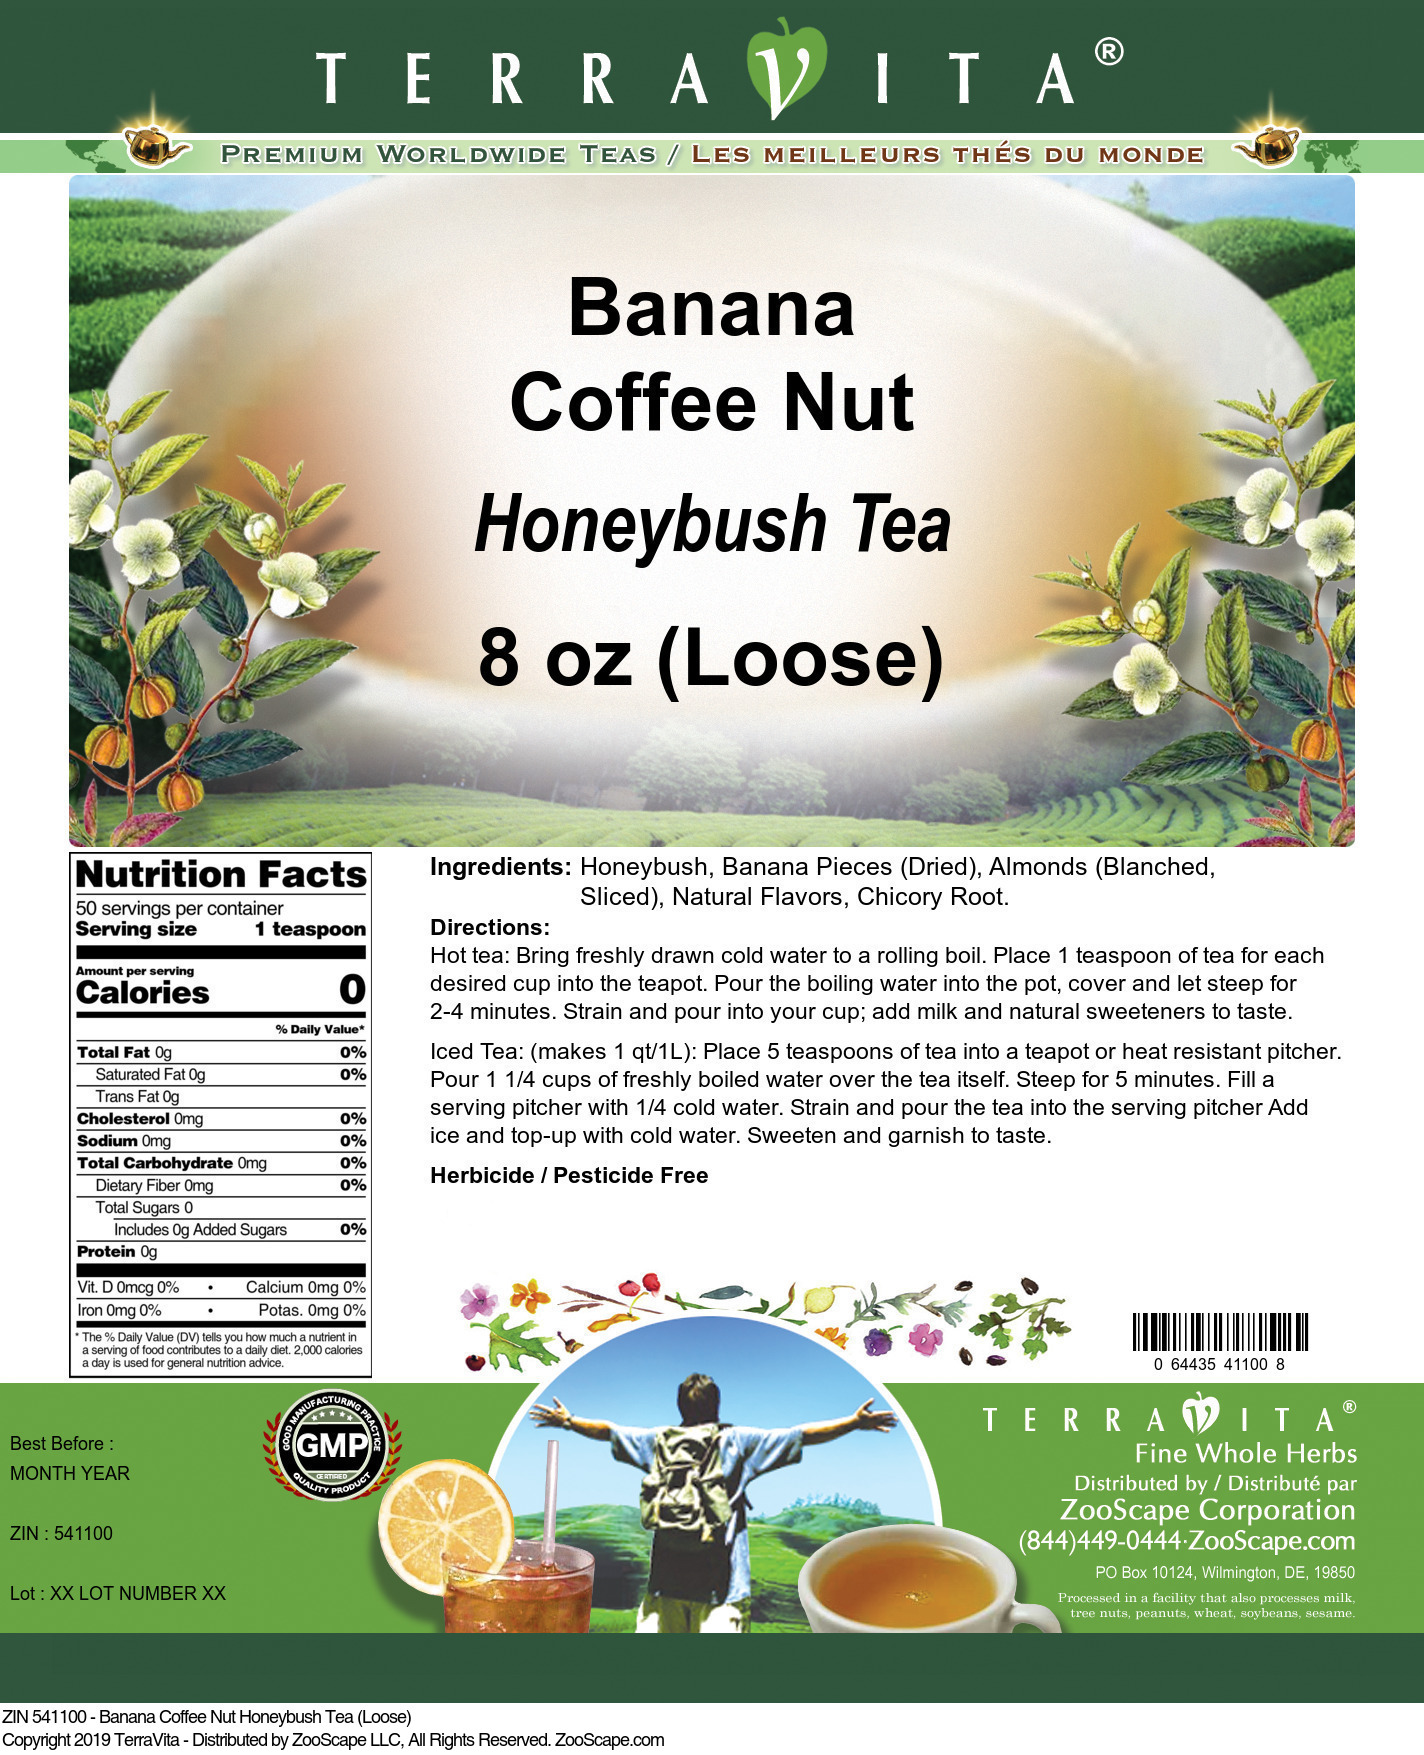 Banana Coffee Nut Honeybush Tea (Loose) - Label